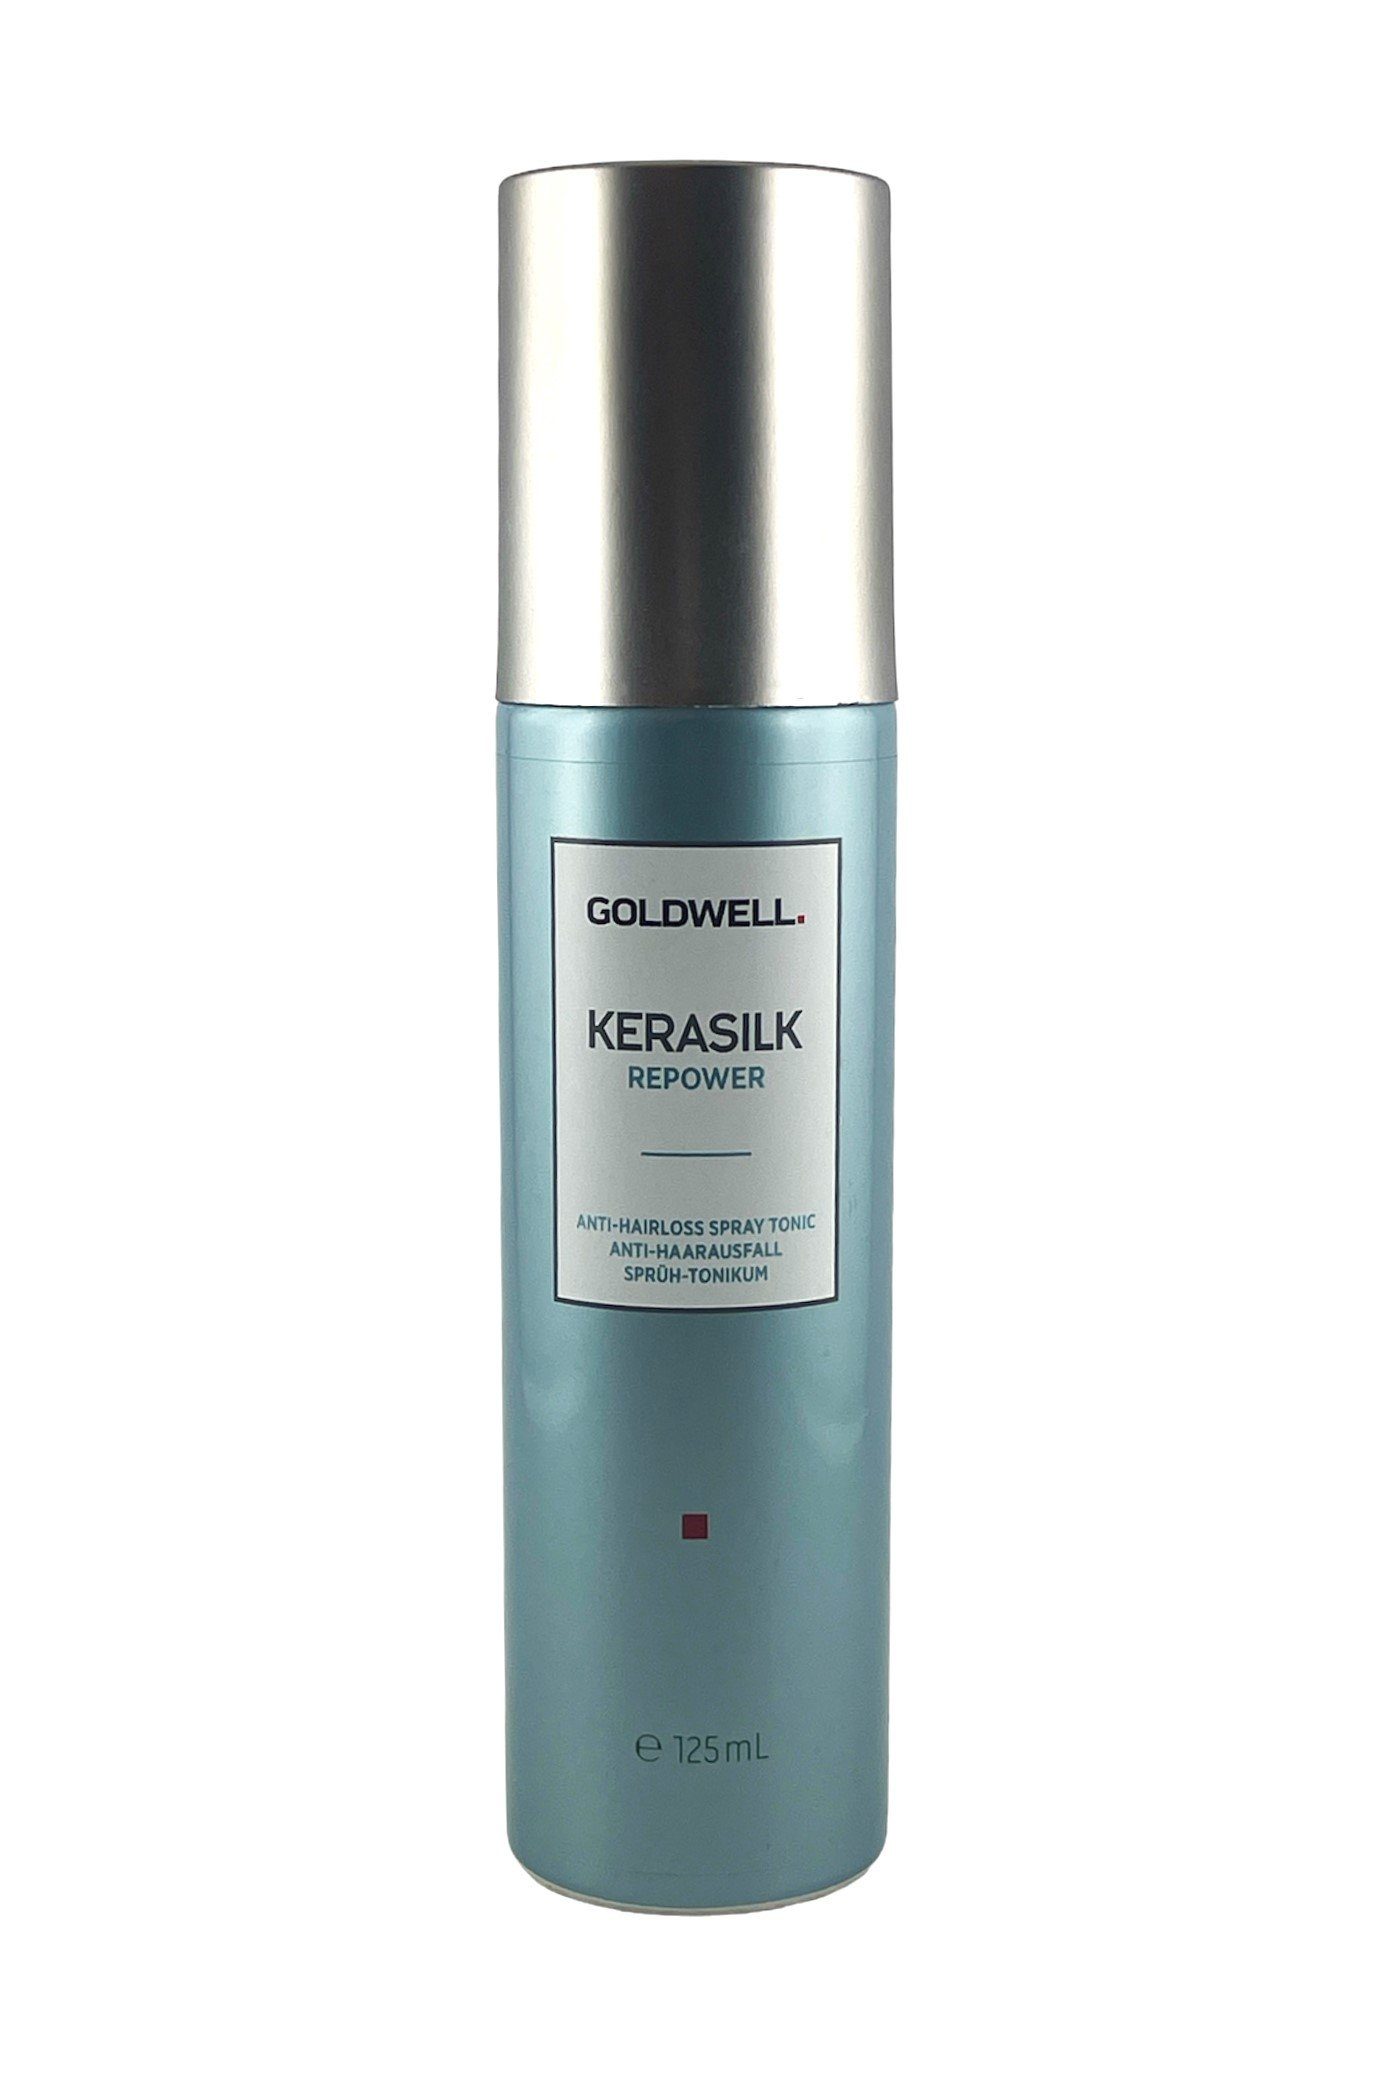 Goldwell Haarspray Goldwell Kerasilk RePower Anti-hairloss Spray Tonic 125ml, 1-tlg.